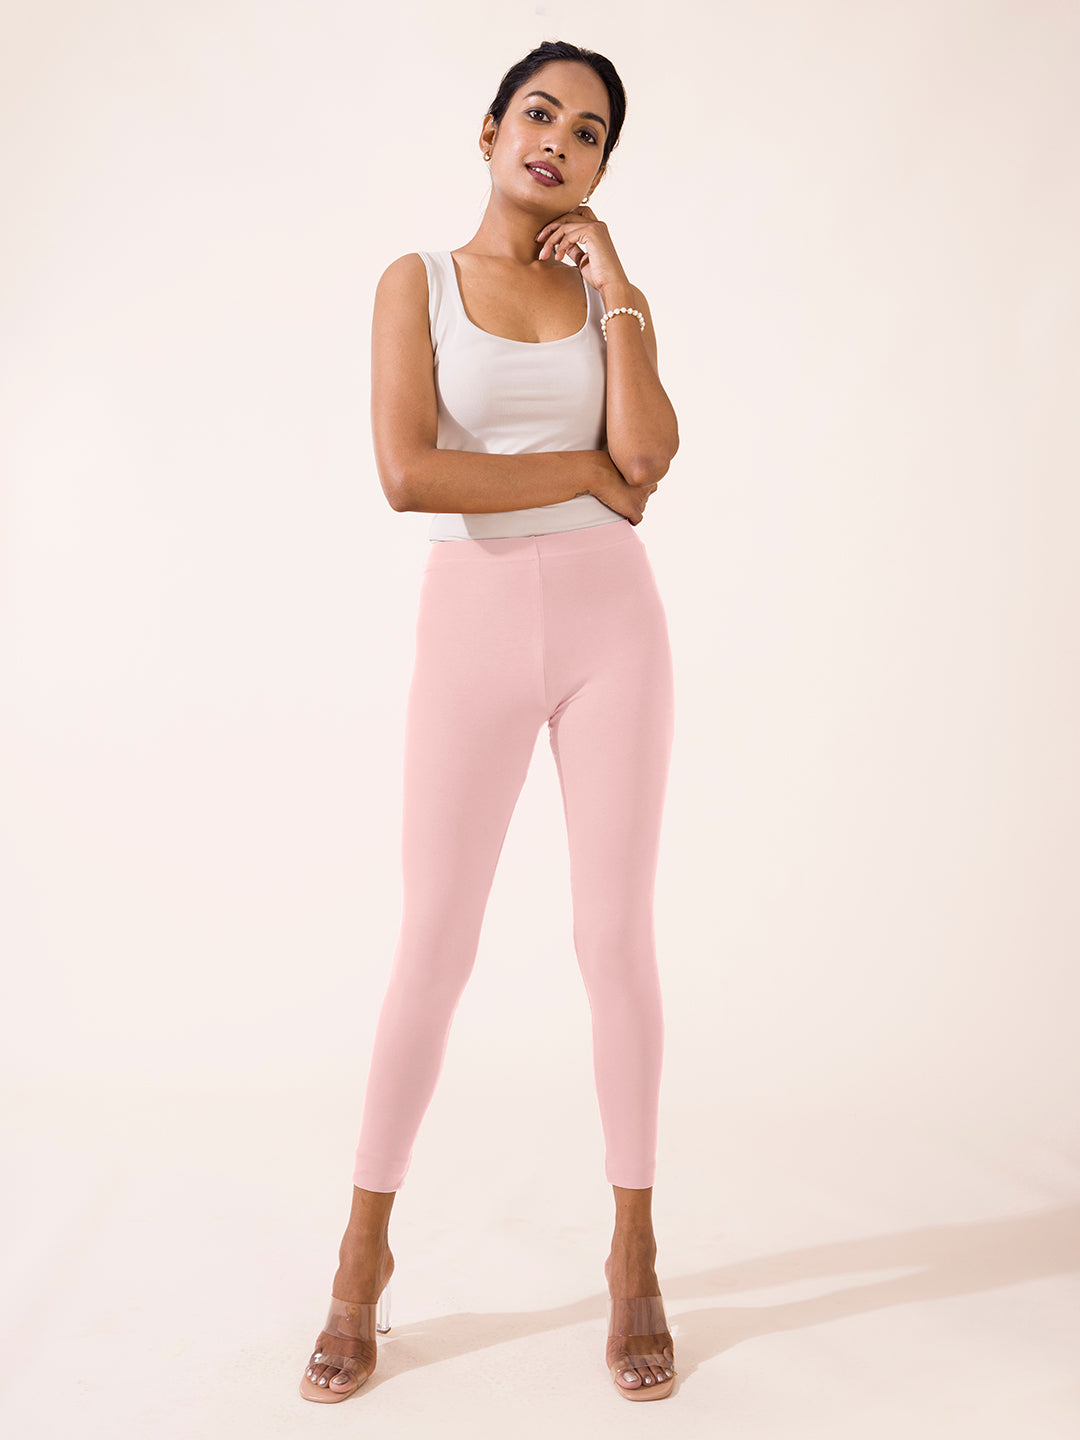 Inspire Leggings - Hot Pink | MT SPORT – Maven Thread